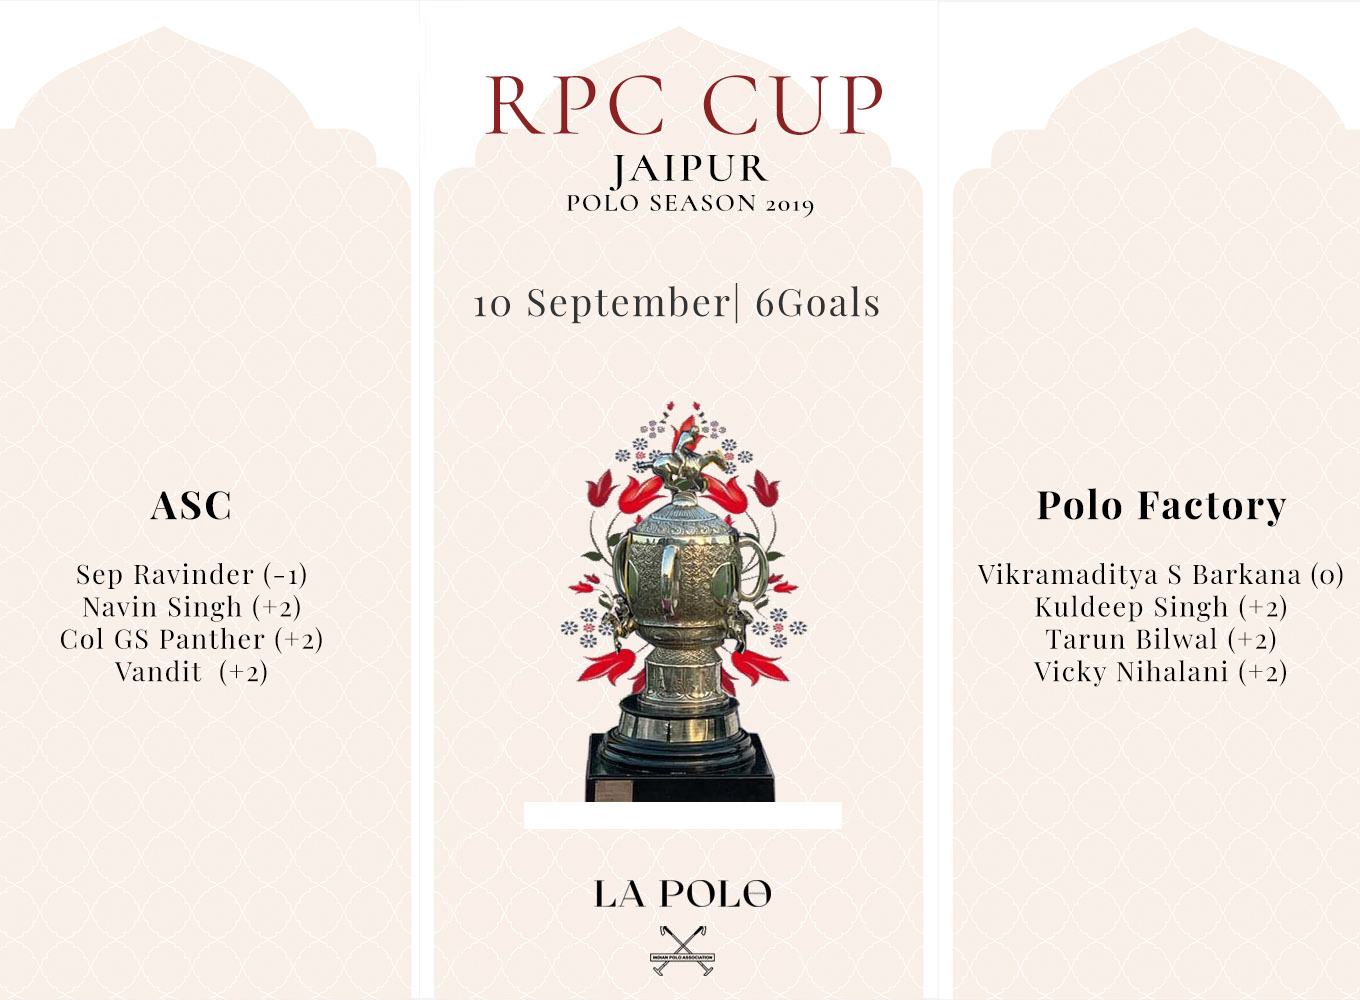 Jaipur polo season draw